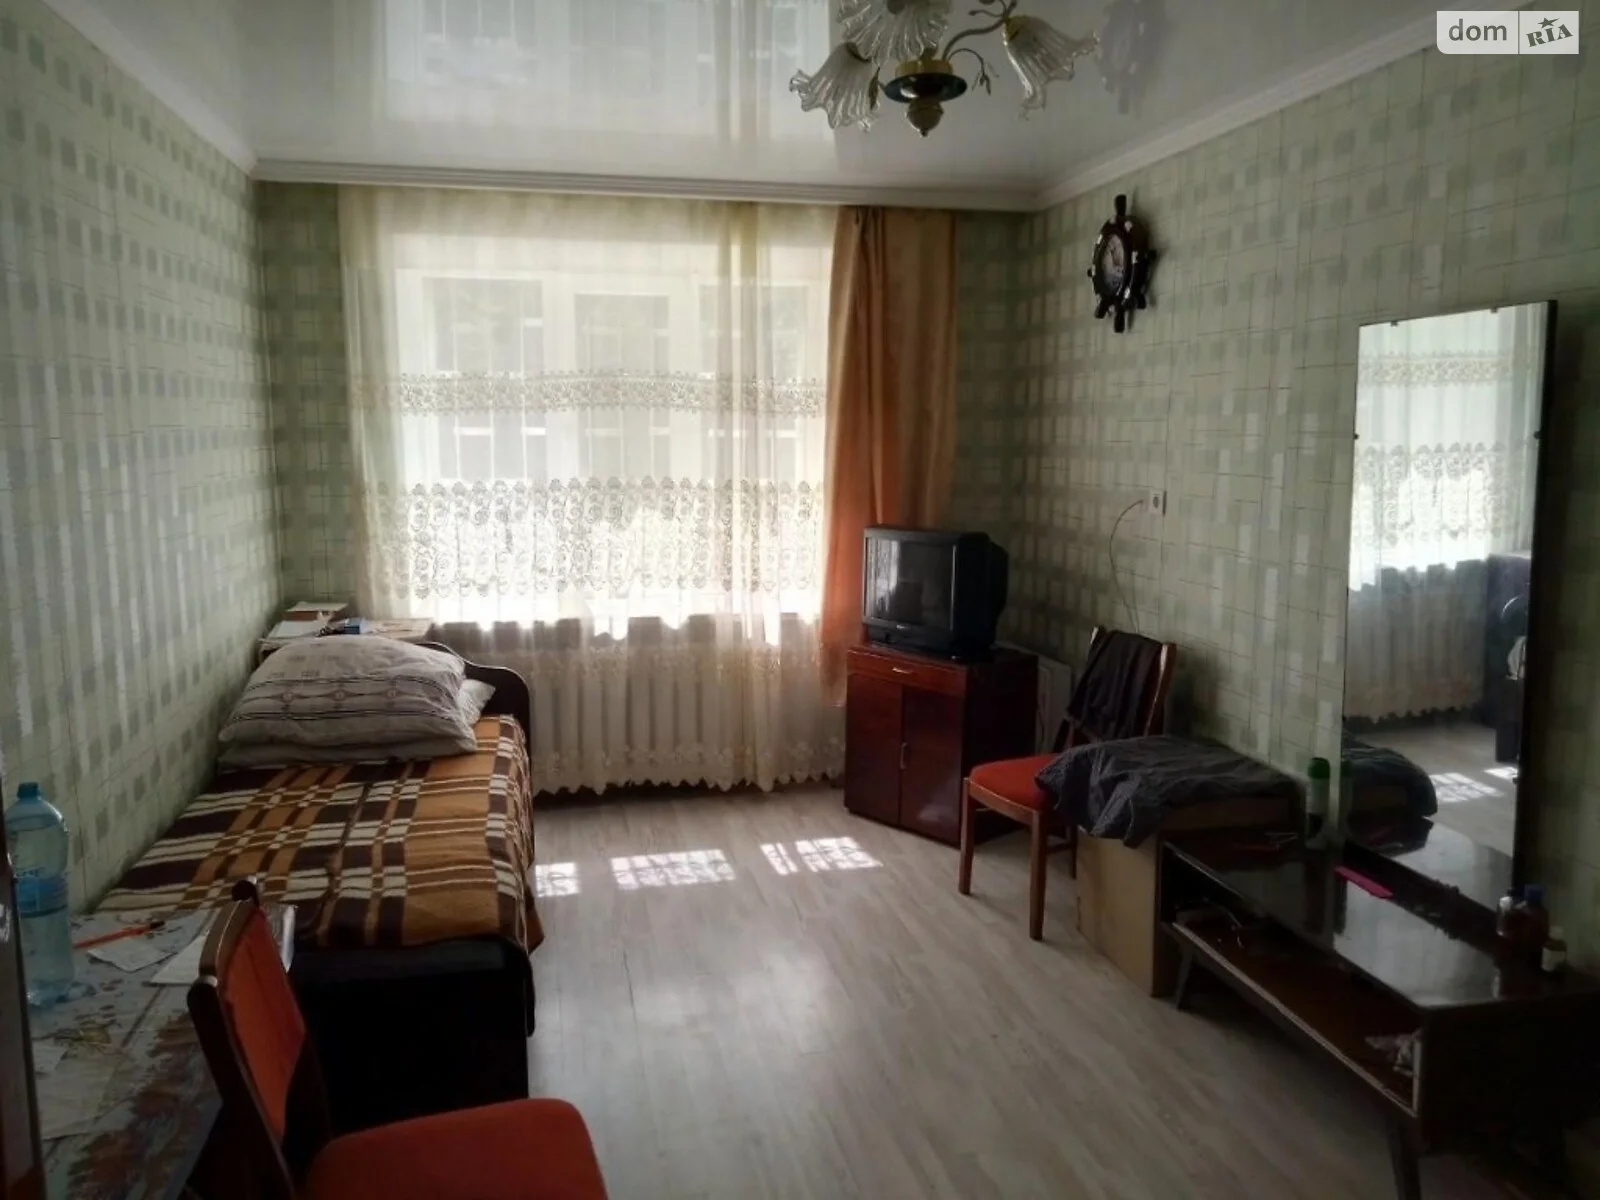 Продается комната 24 кв. м в Одессе, цена: 16500 $ - фото 1